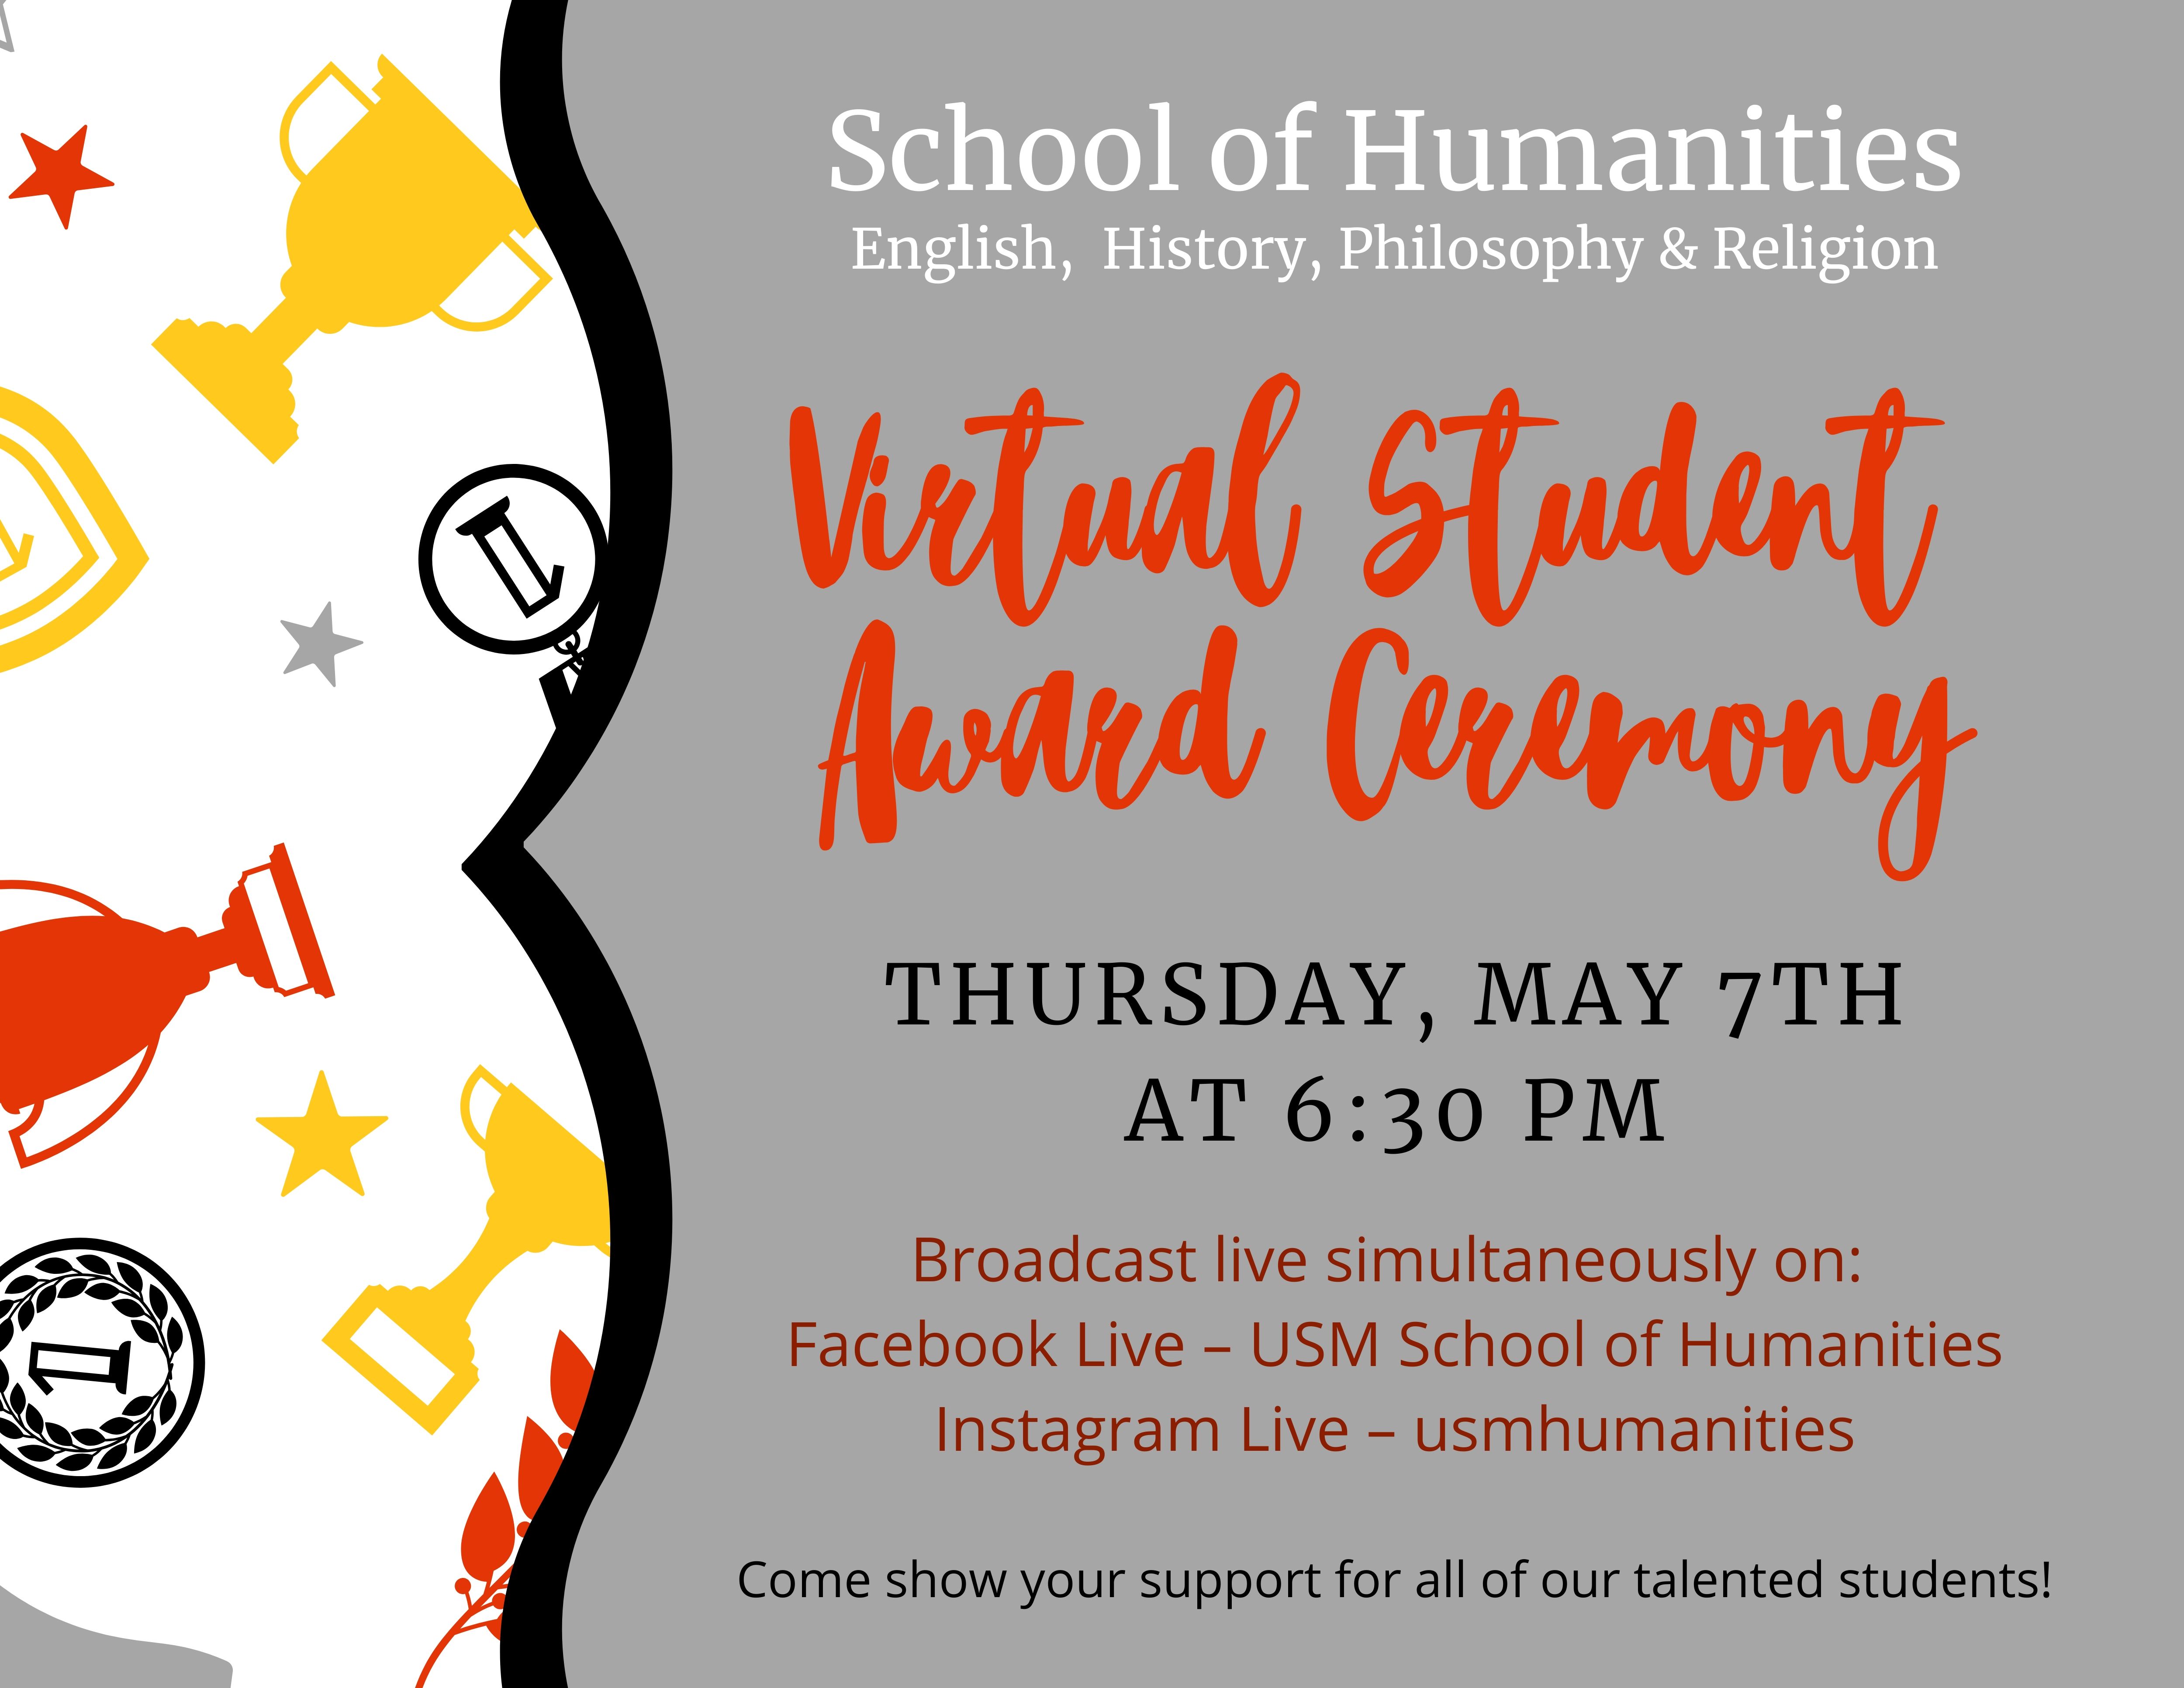 School of Humanities Virtual Awards Ceremony